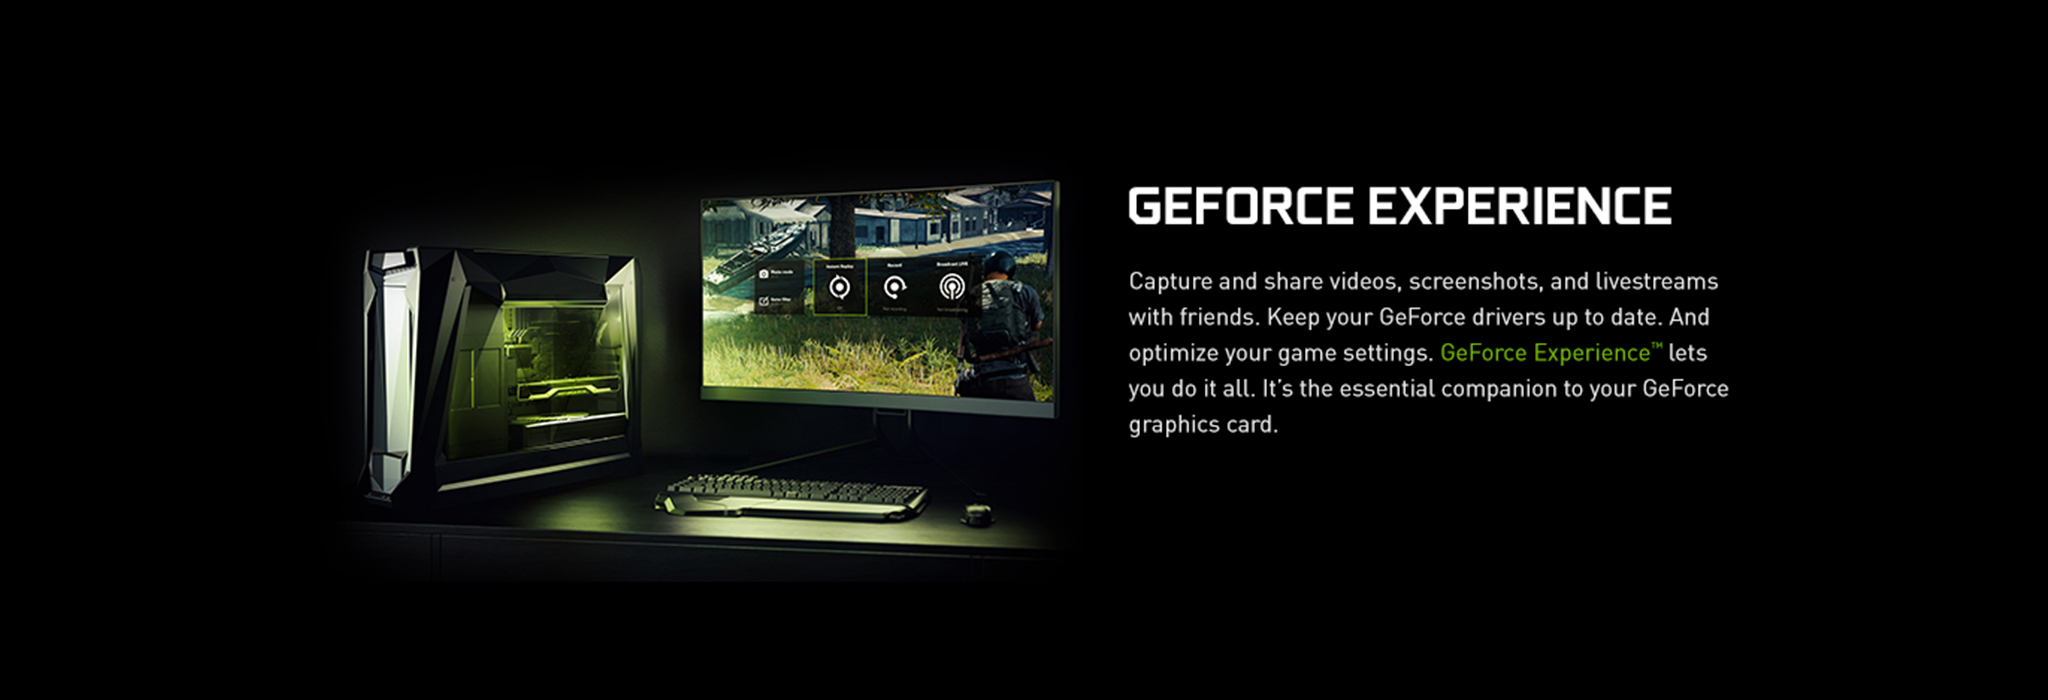 Geforce 1660 ti драйвер. GEFORCE experience 1650. GTX 1650 драйвер. NVIDIA GEFORCE GTX 1660 Driver. Драйвера GTX 1650 Скриншоты.